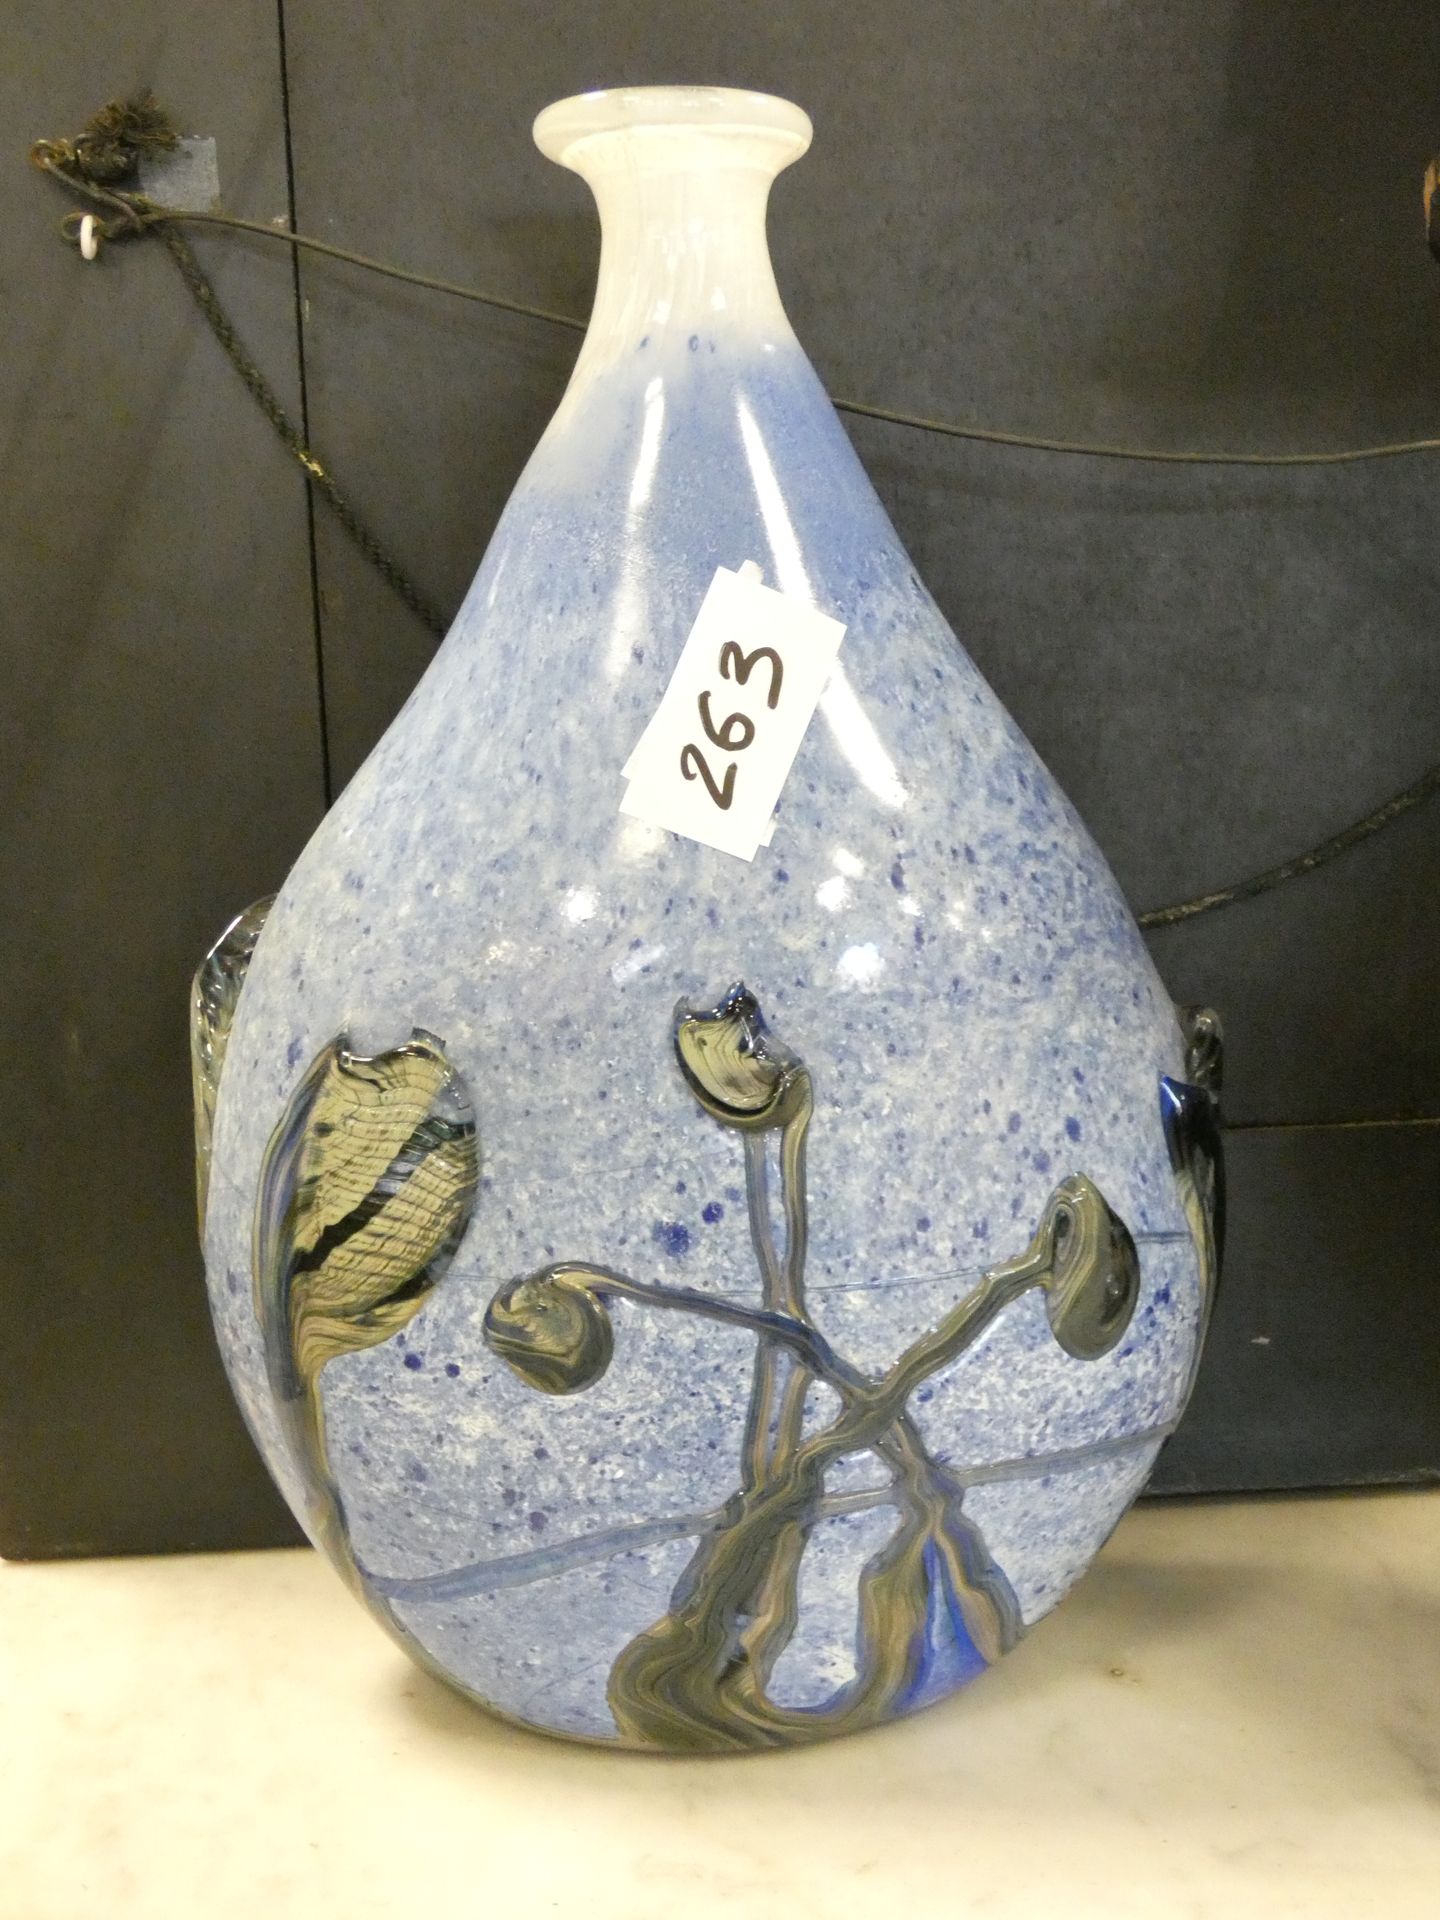 JEAN CLAUDE NOVARO 1个签名为Jean Claude Novaro（1943-2015）的大玻璃花瓶，日期为2004年，高45厘米